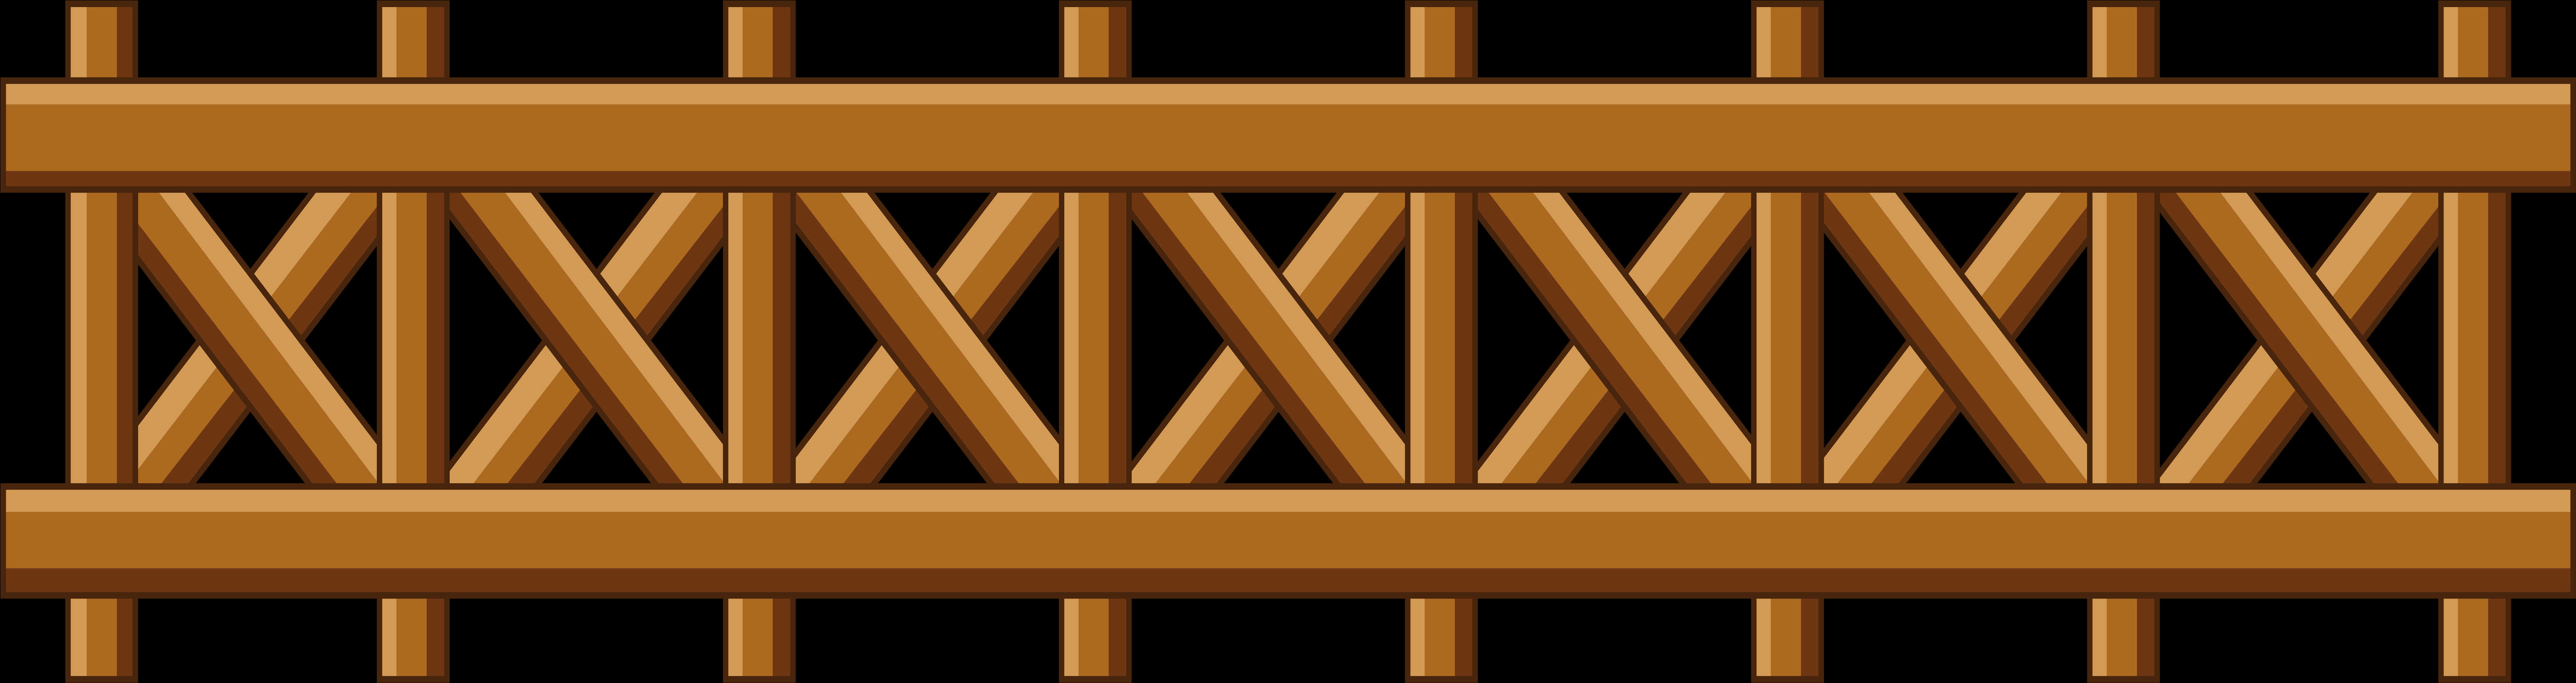 Wooden Fence Design Vector PNG